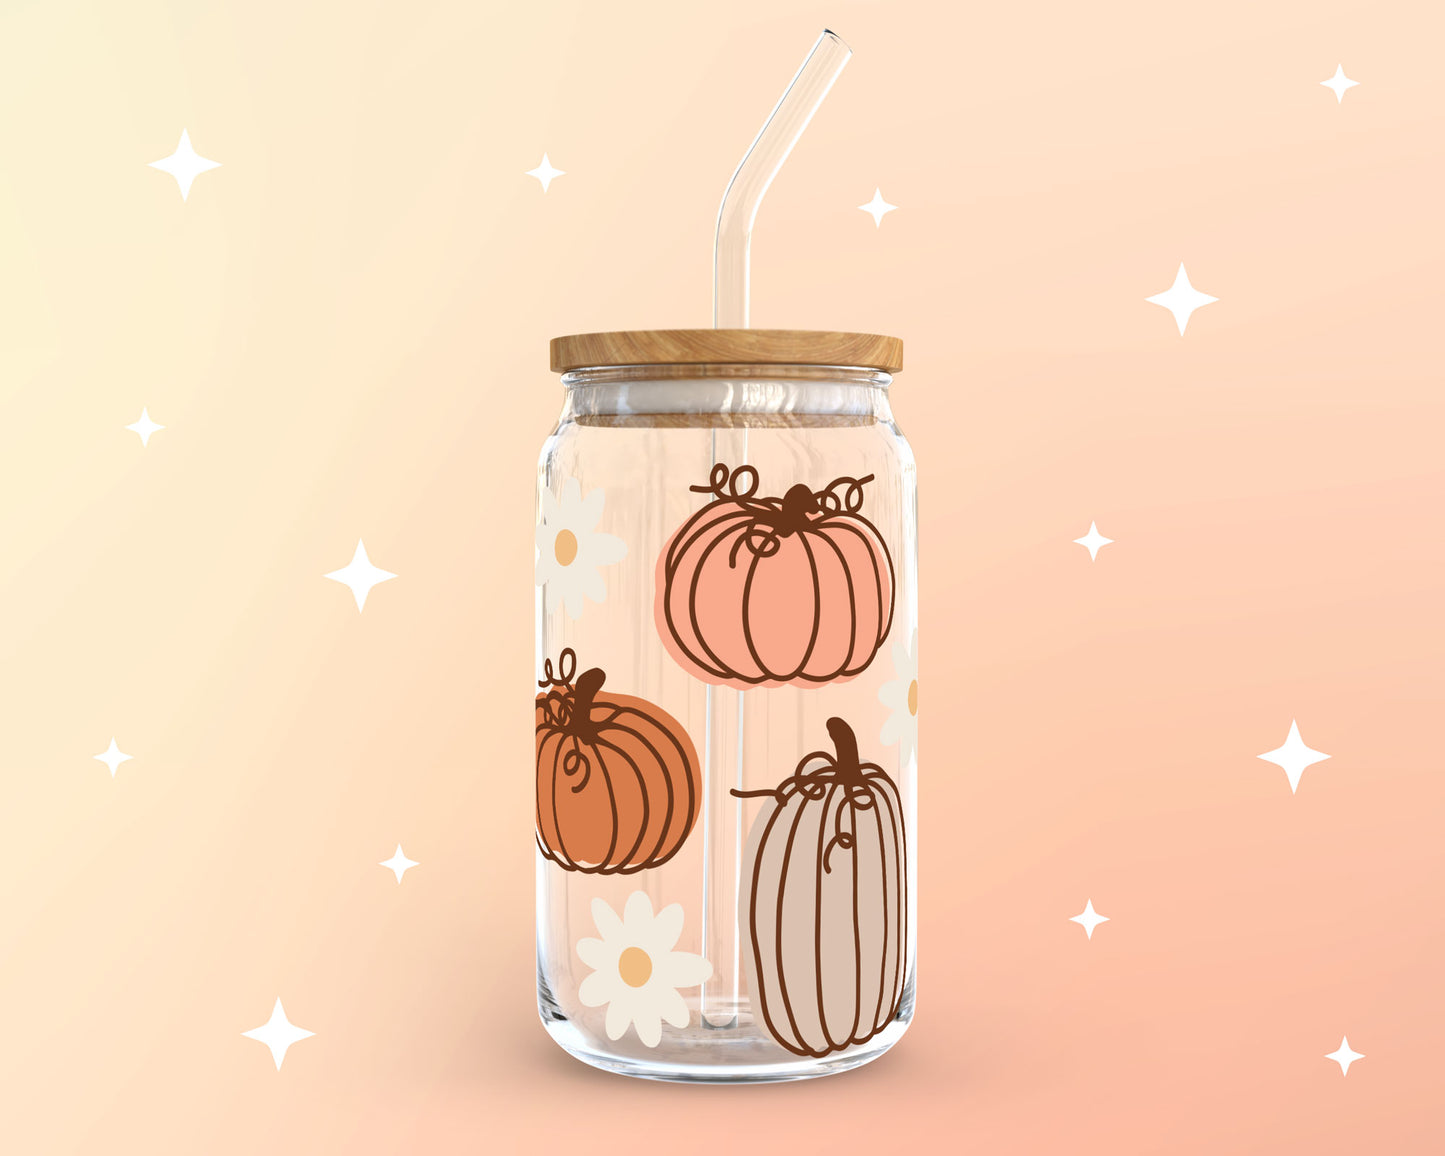 FREE Floral Pumpkin SVG | Cute Retro Fall SVG For DIY Craft 